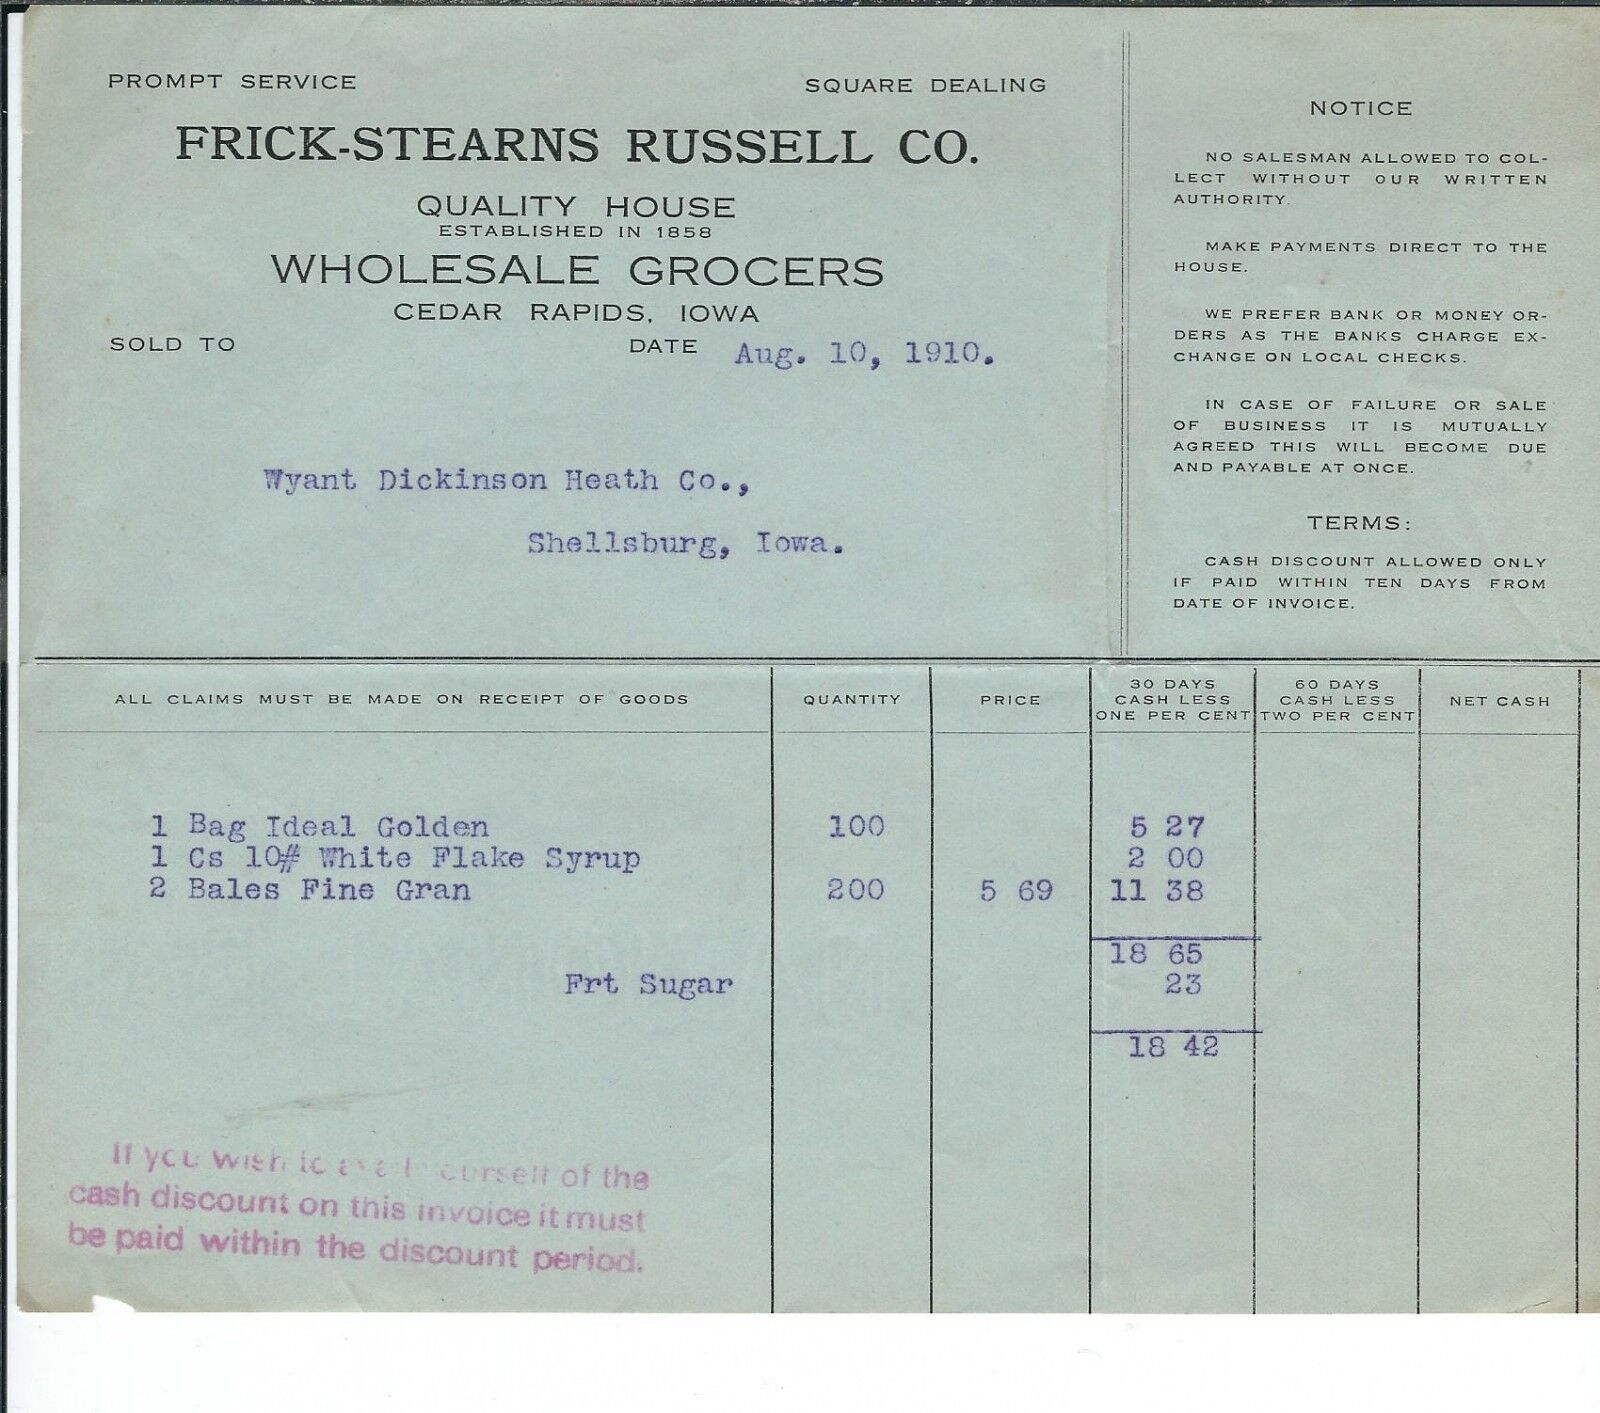 ME-102 - Cedar Rapids, Iowa, August 10, 1910 Invoice Frick Stearns Russell Co